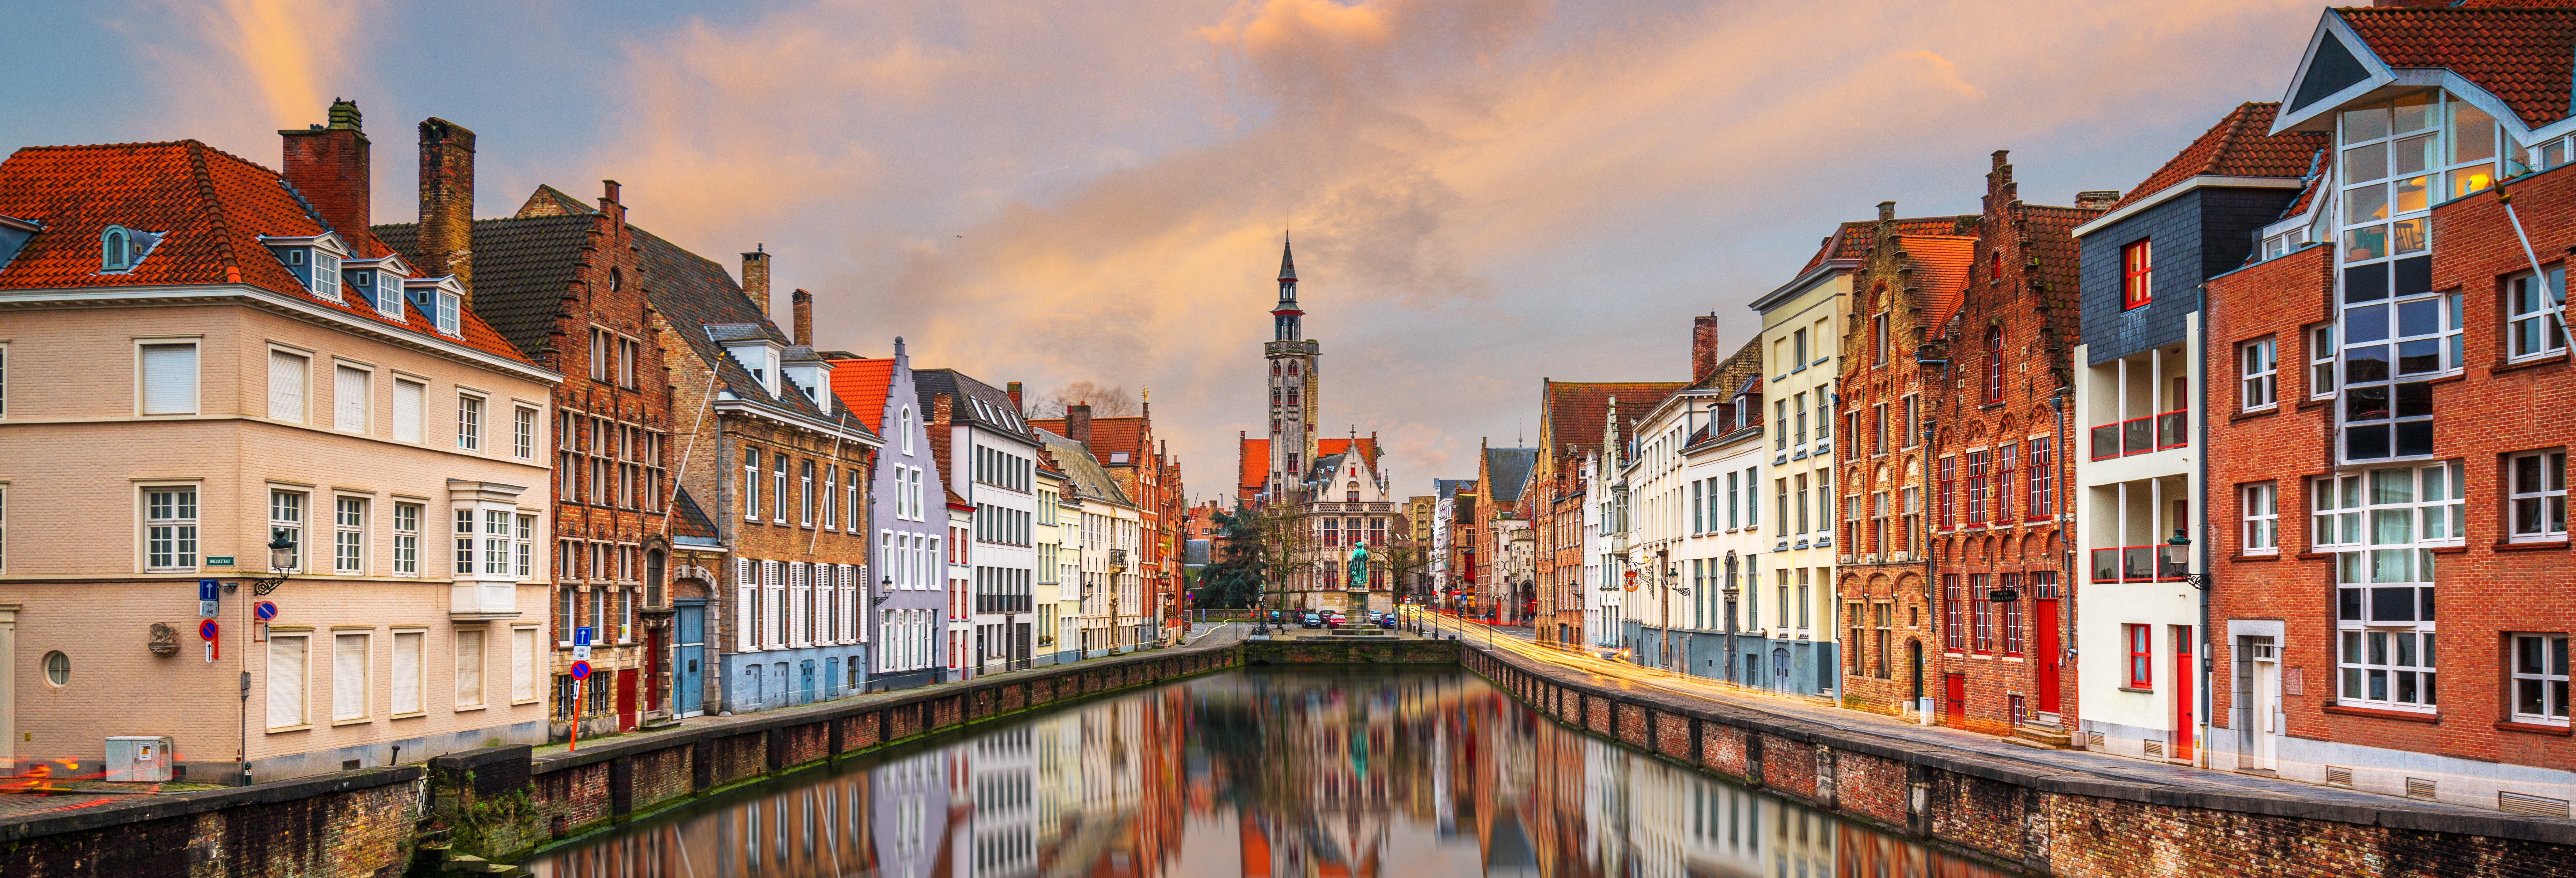 Tour panorâmico de Bruges